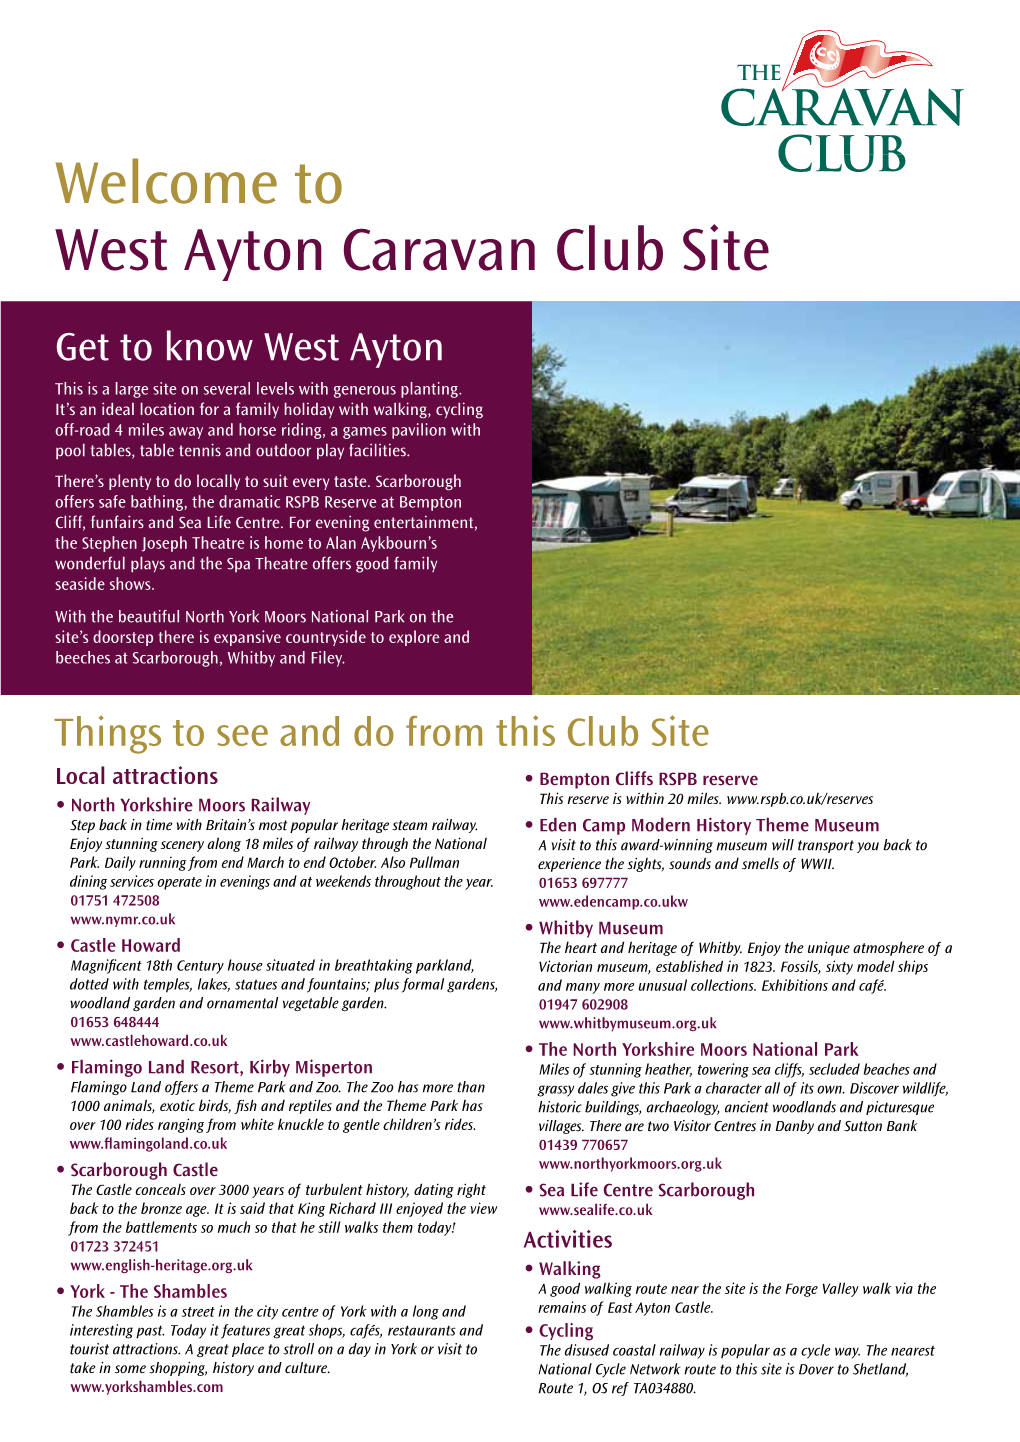 Welcome to West Ayton Caravan Club Site